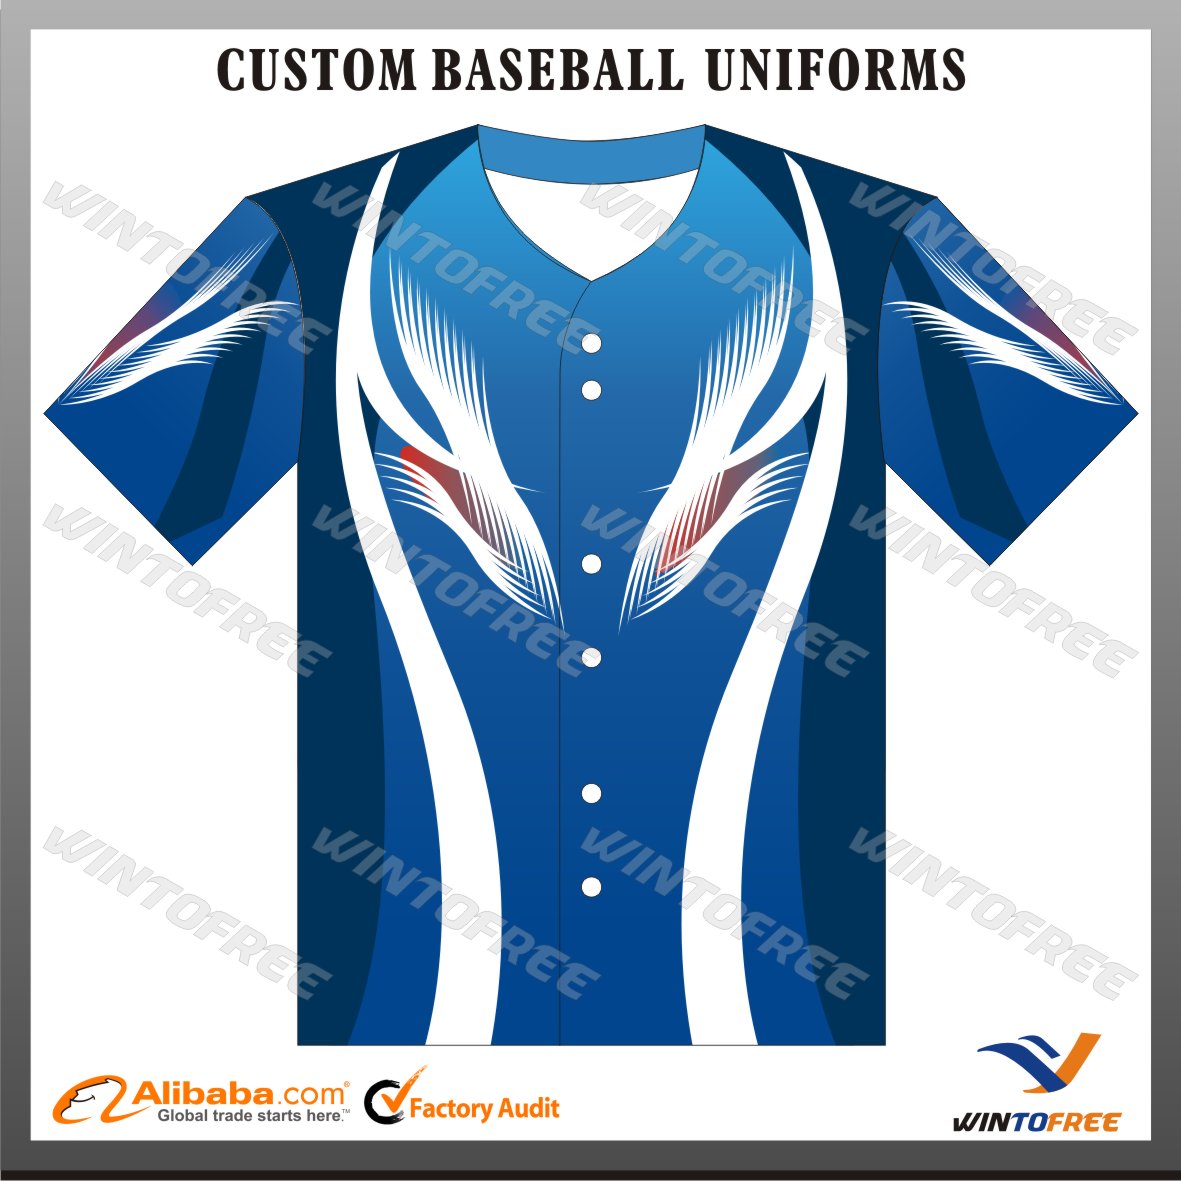 Baseball Uniform Suppliers 117